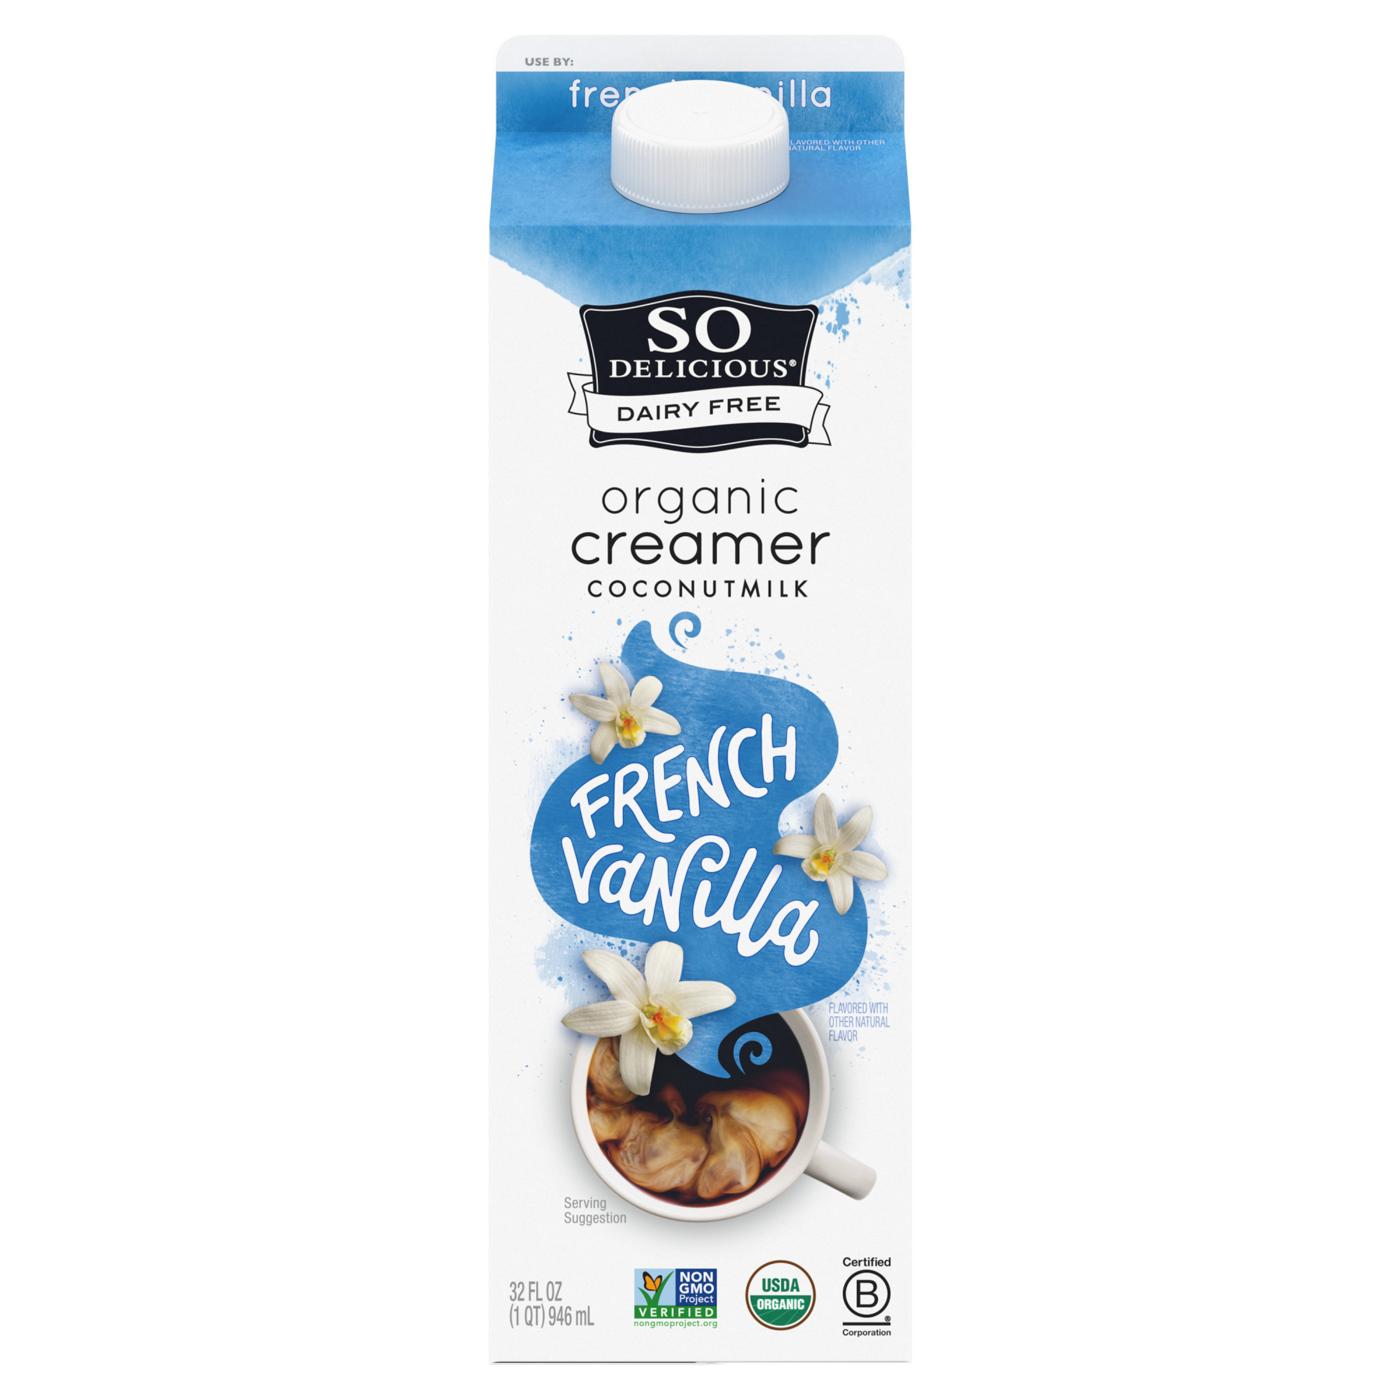 So Delicious Dairy Free Organic French Vanilla Coconutmilk Creamer; image 1 of 7